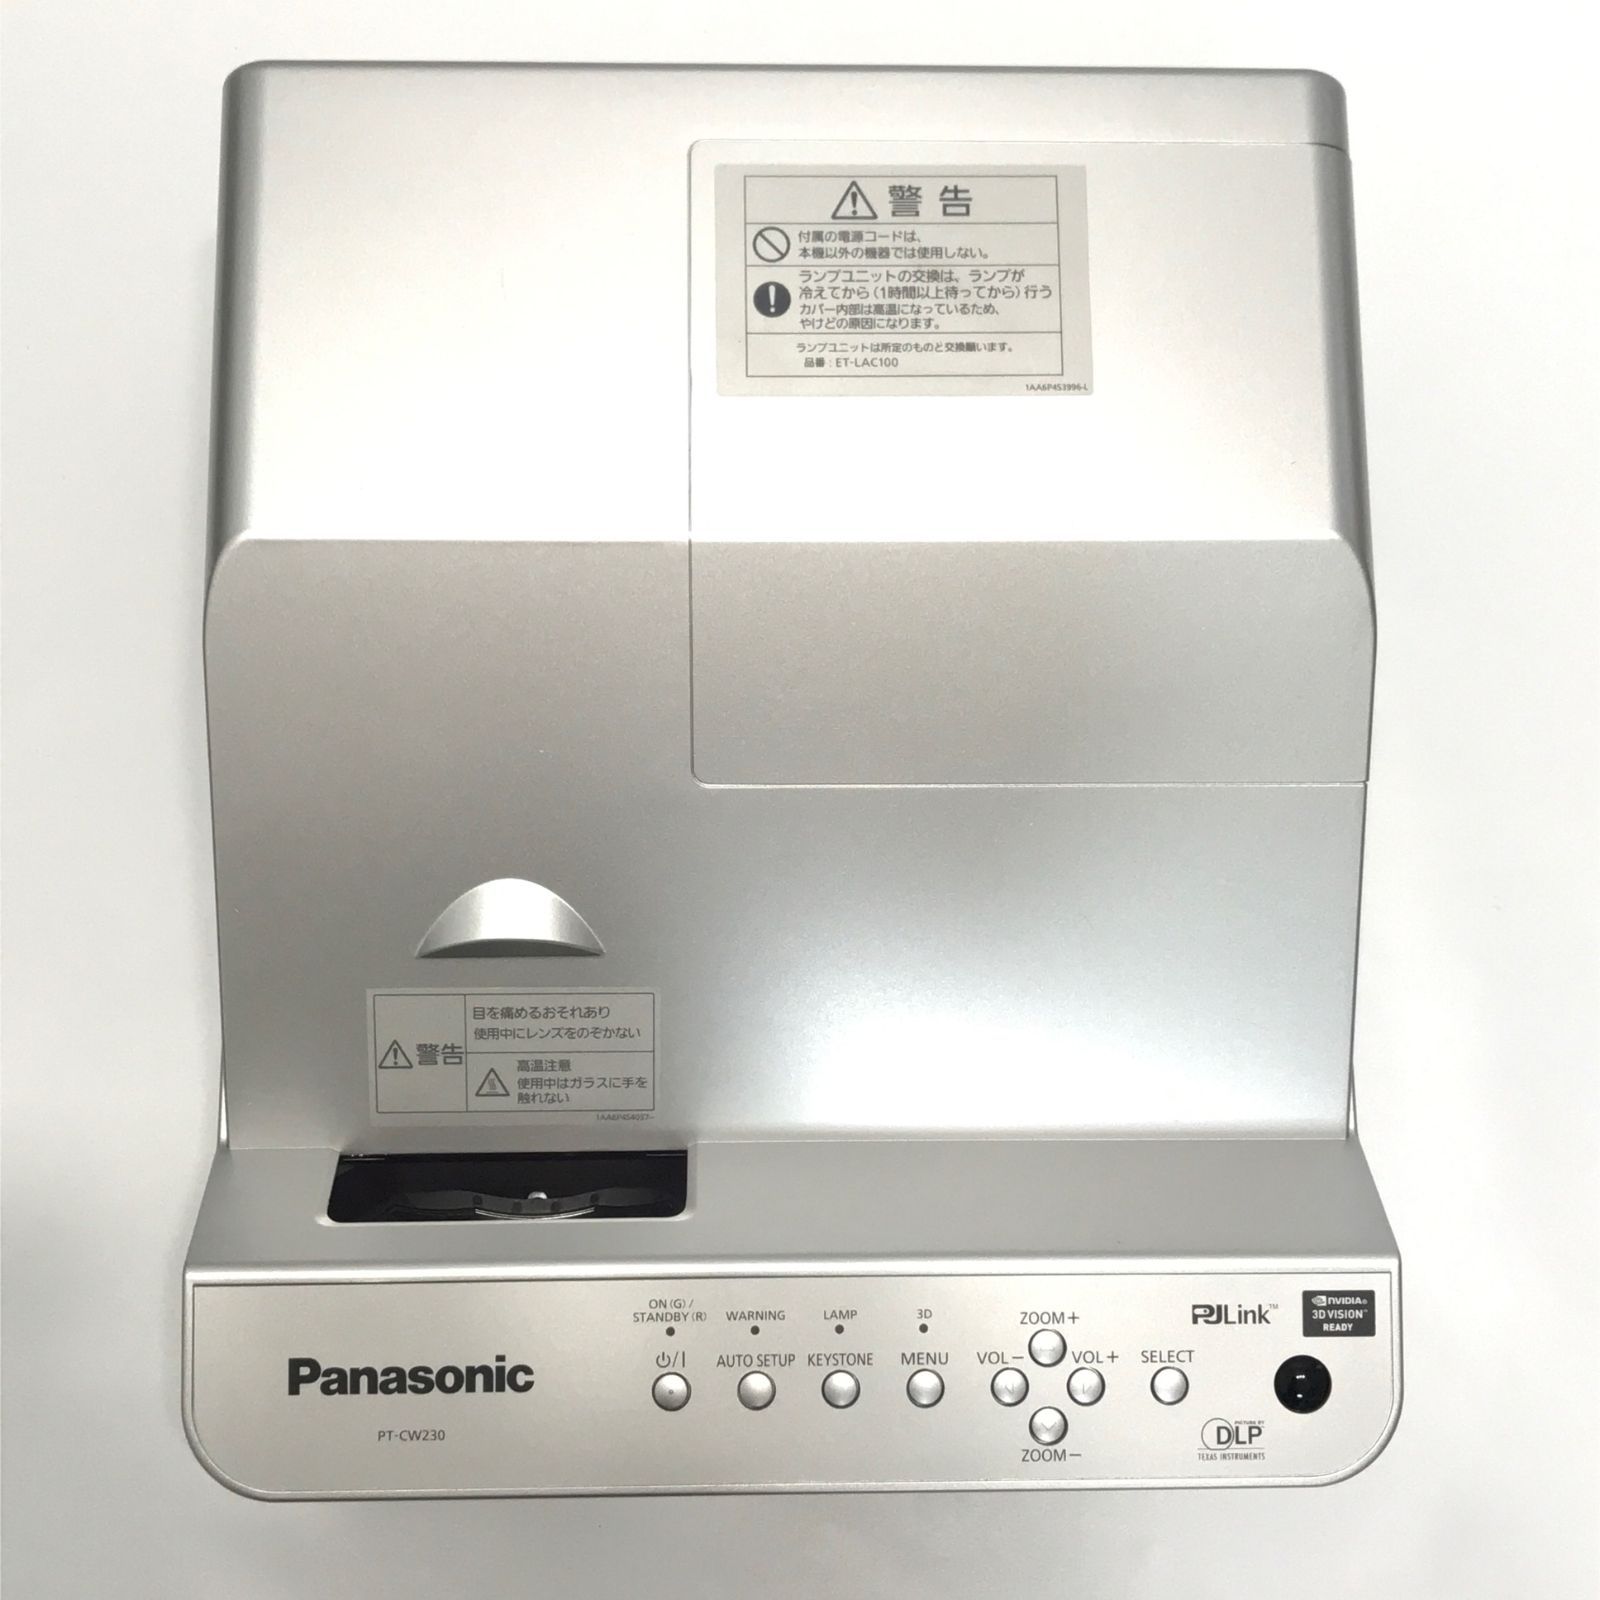 Panasonic パナソニック PT-DW830W DLPプロジェクター - テレビ/映像機器